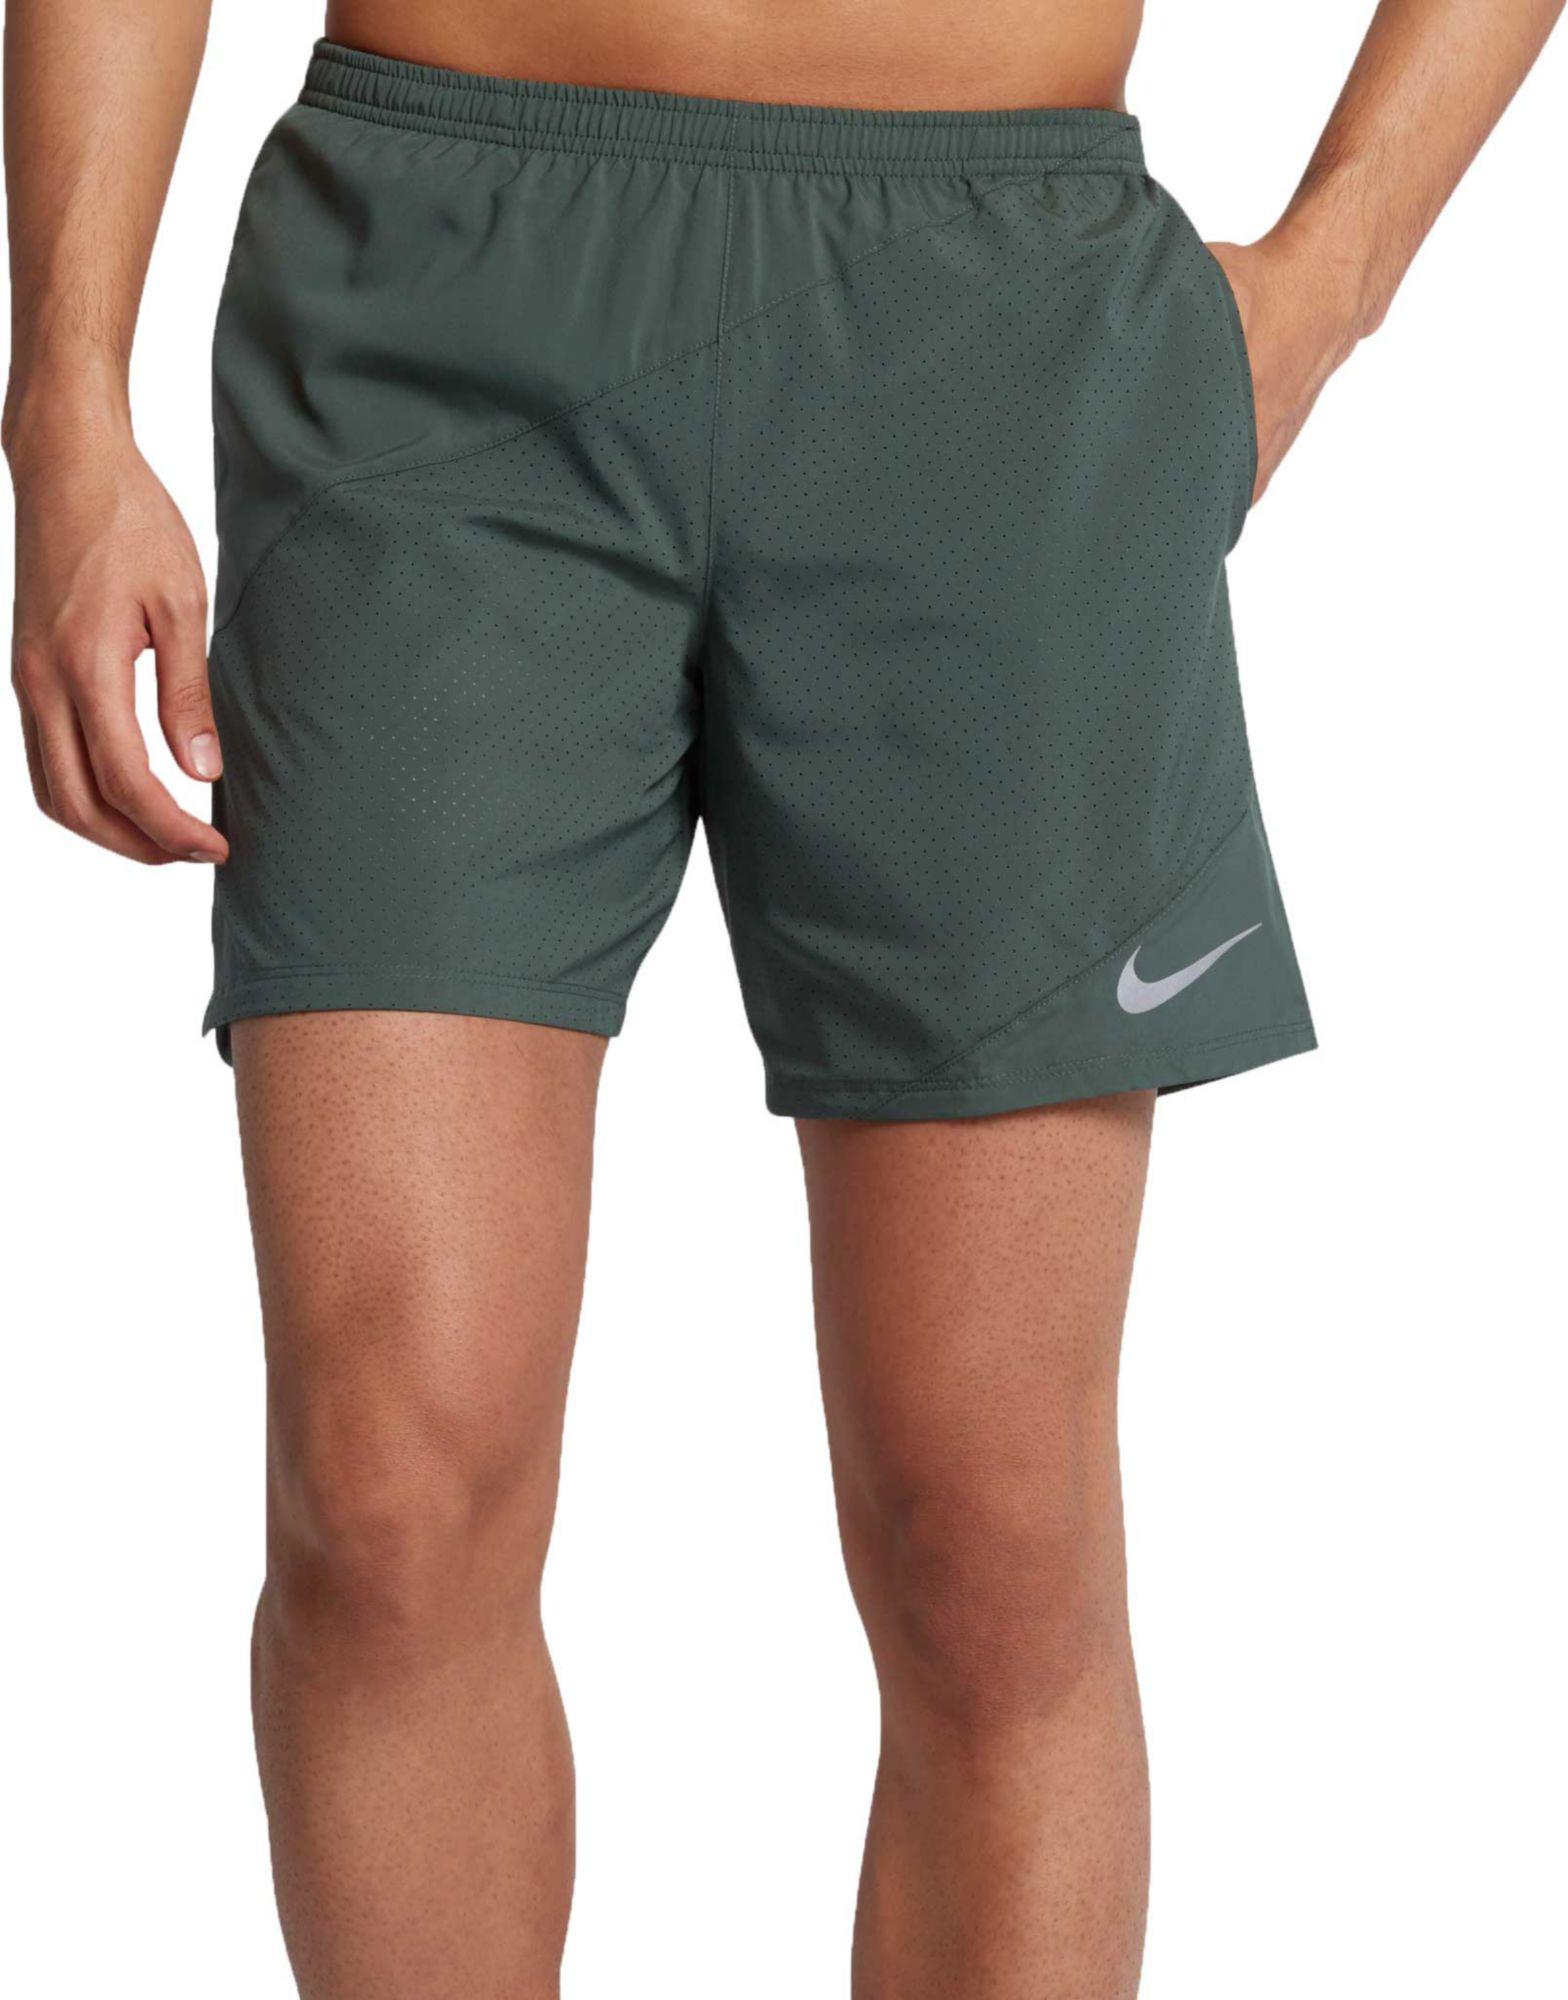 nike distance 7 running shorts